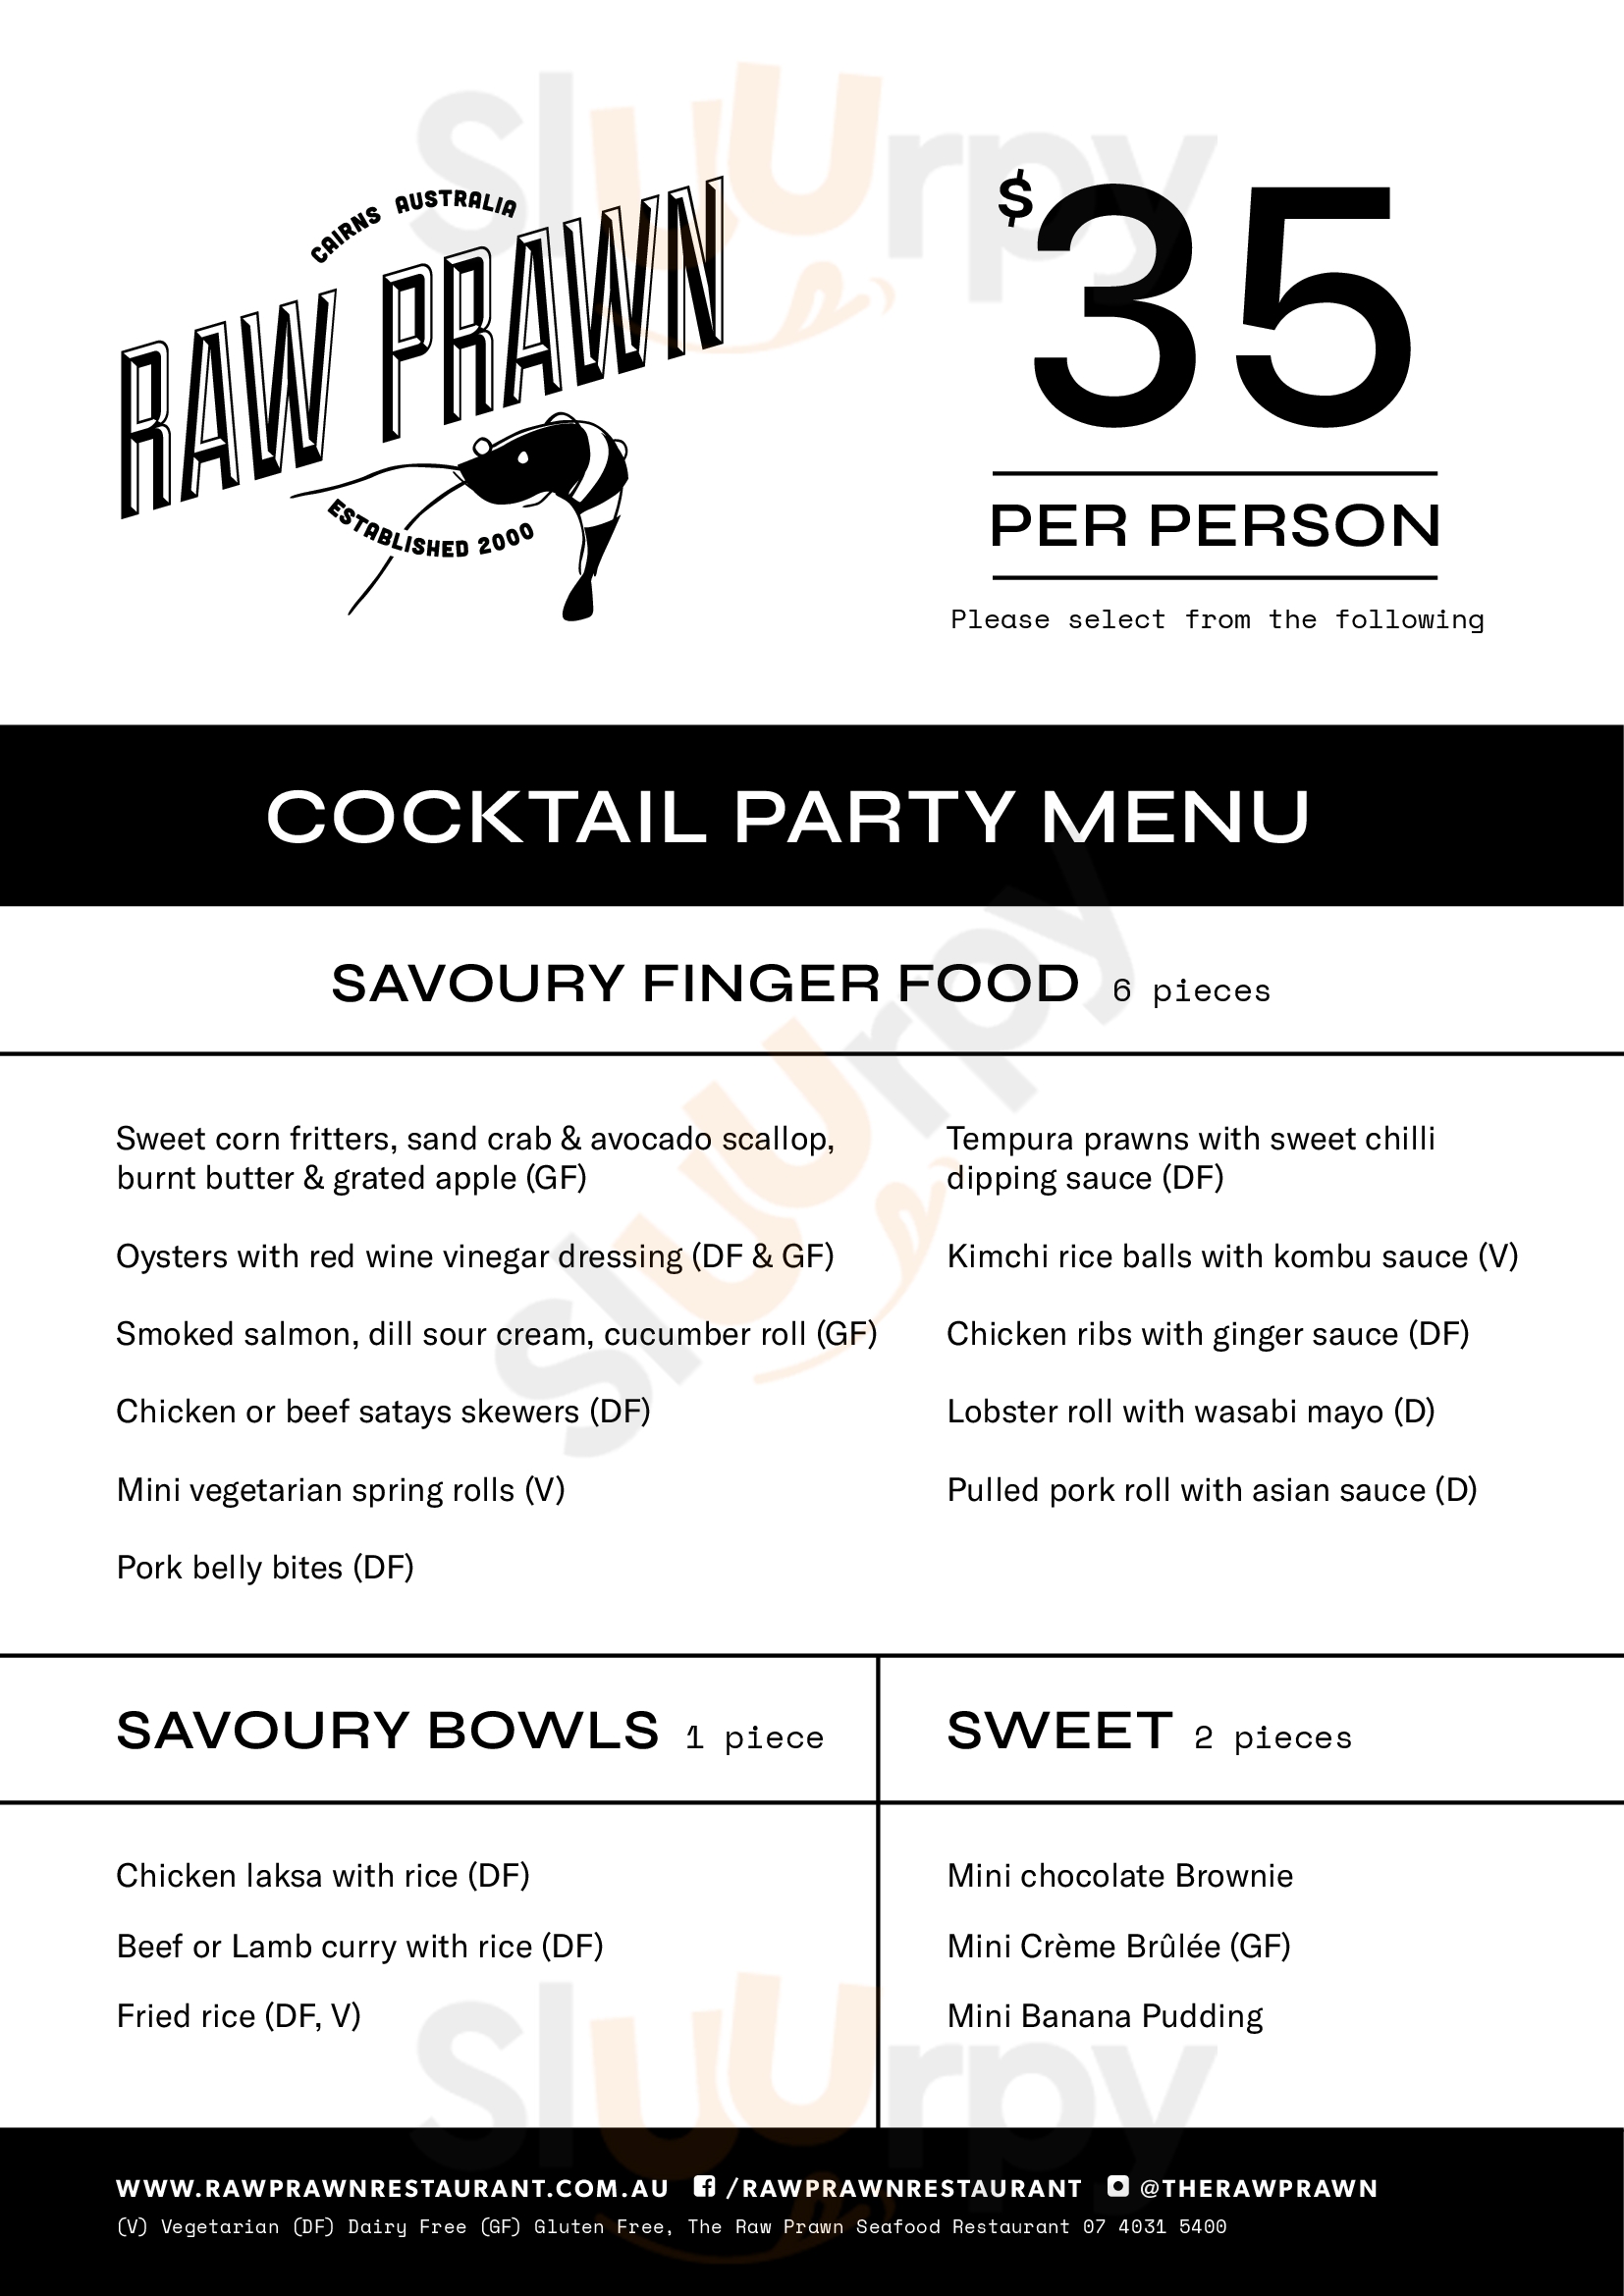 Raw Prawn Seafood Restaurant Cairns Menu - 1